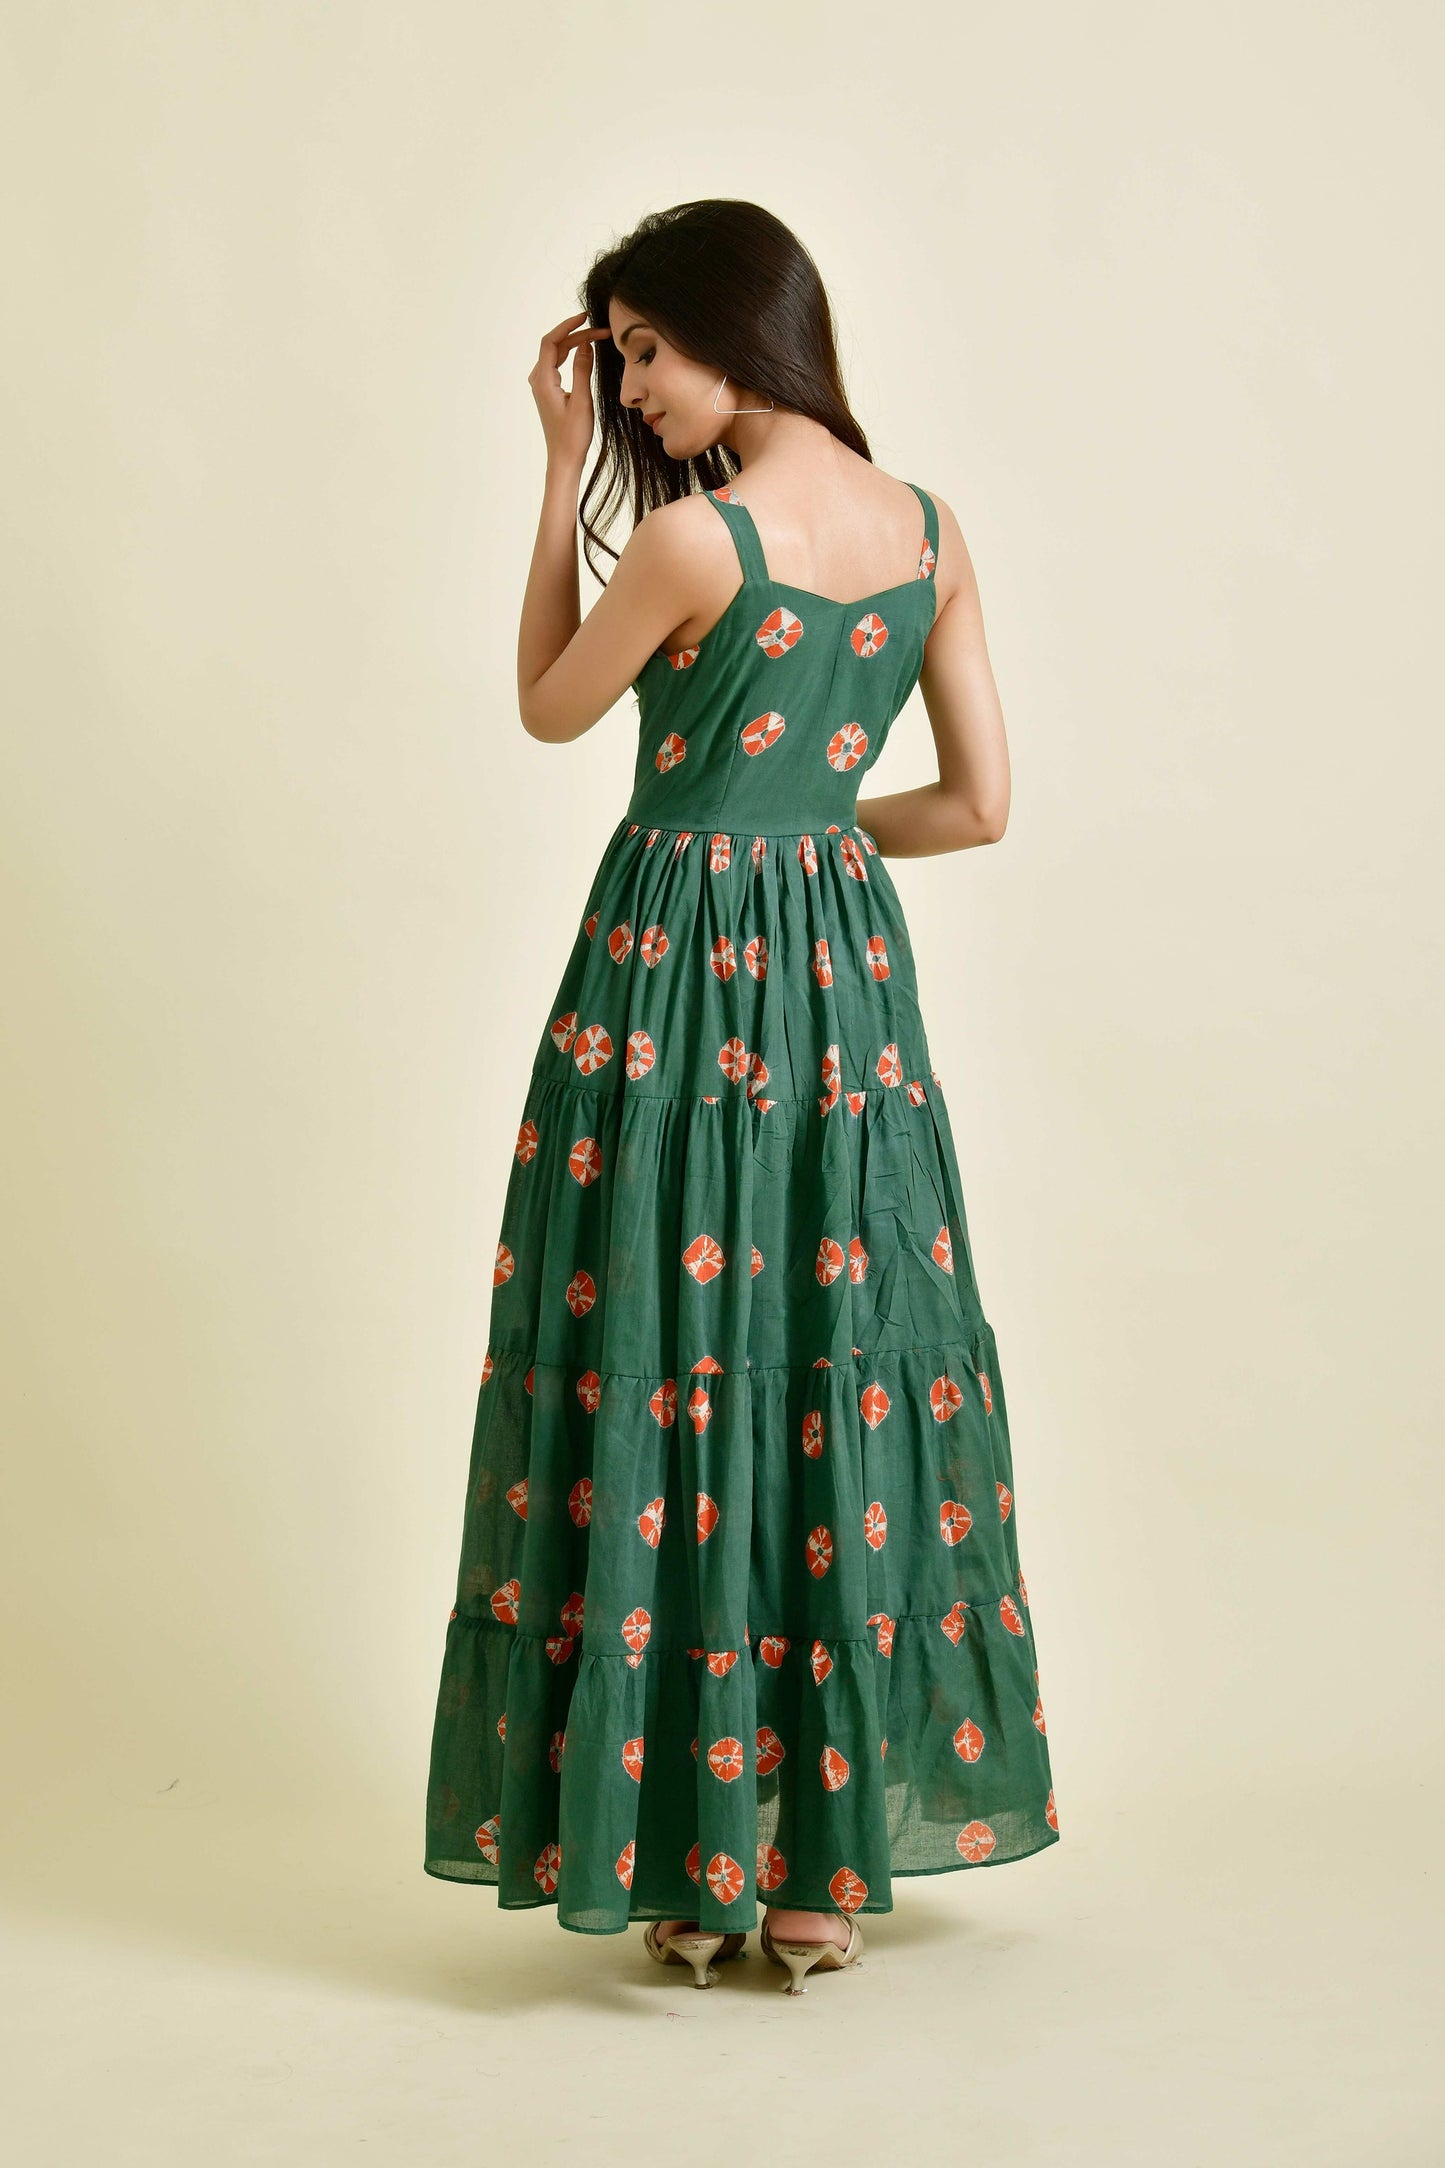 Nature's Elegance: Green Shibori Dress by Style Triggers